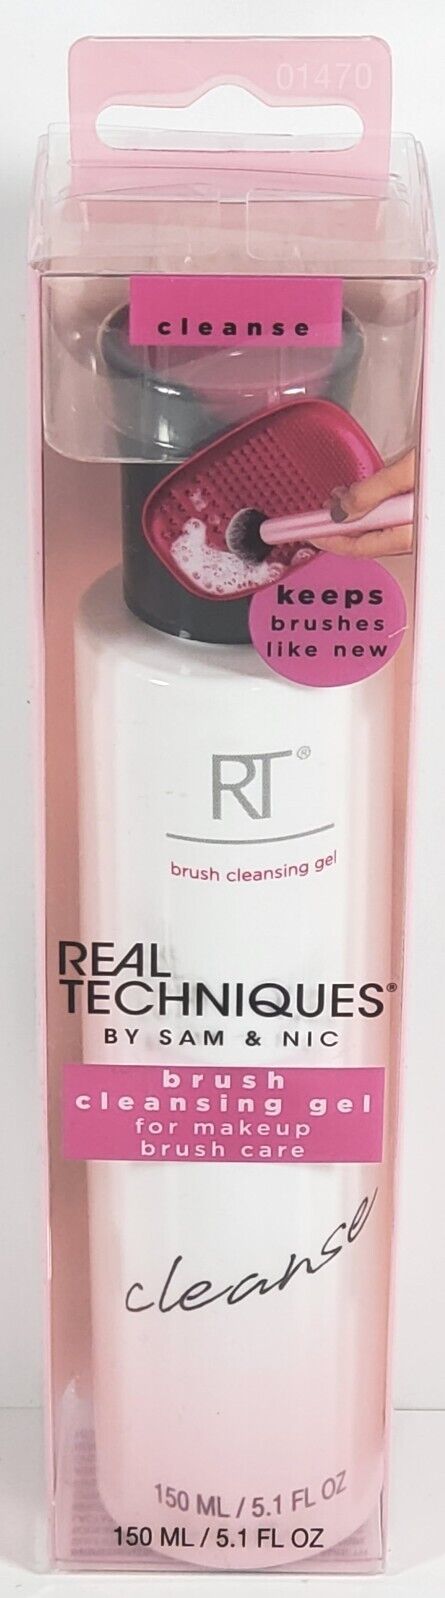 REAL TECHNIQUES Makeup Brush Cleansing Gel 5.1 FL OZ NIB - $9.95